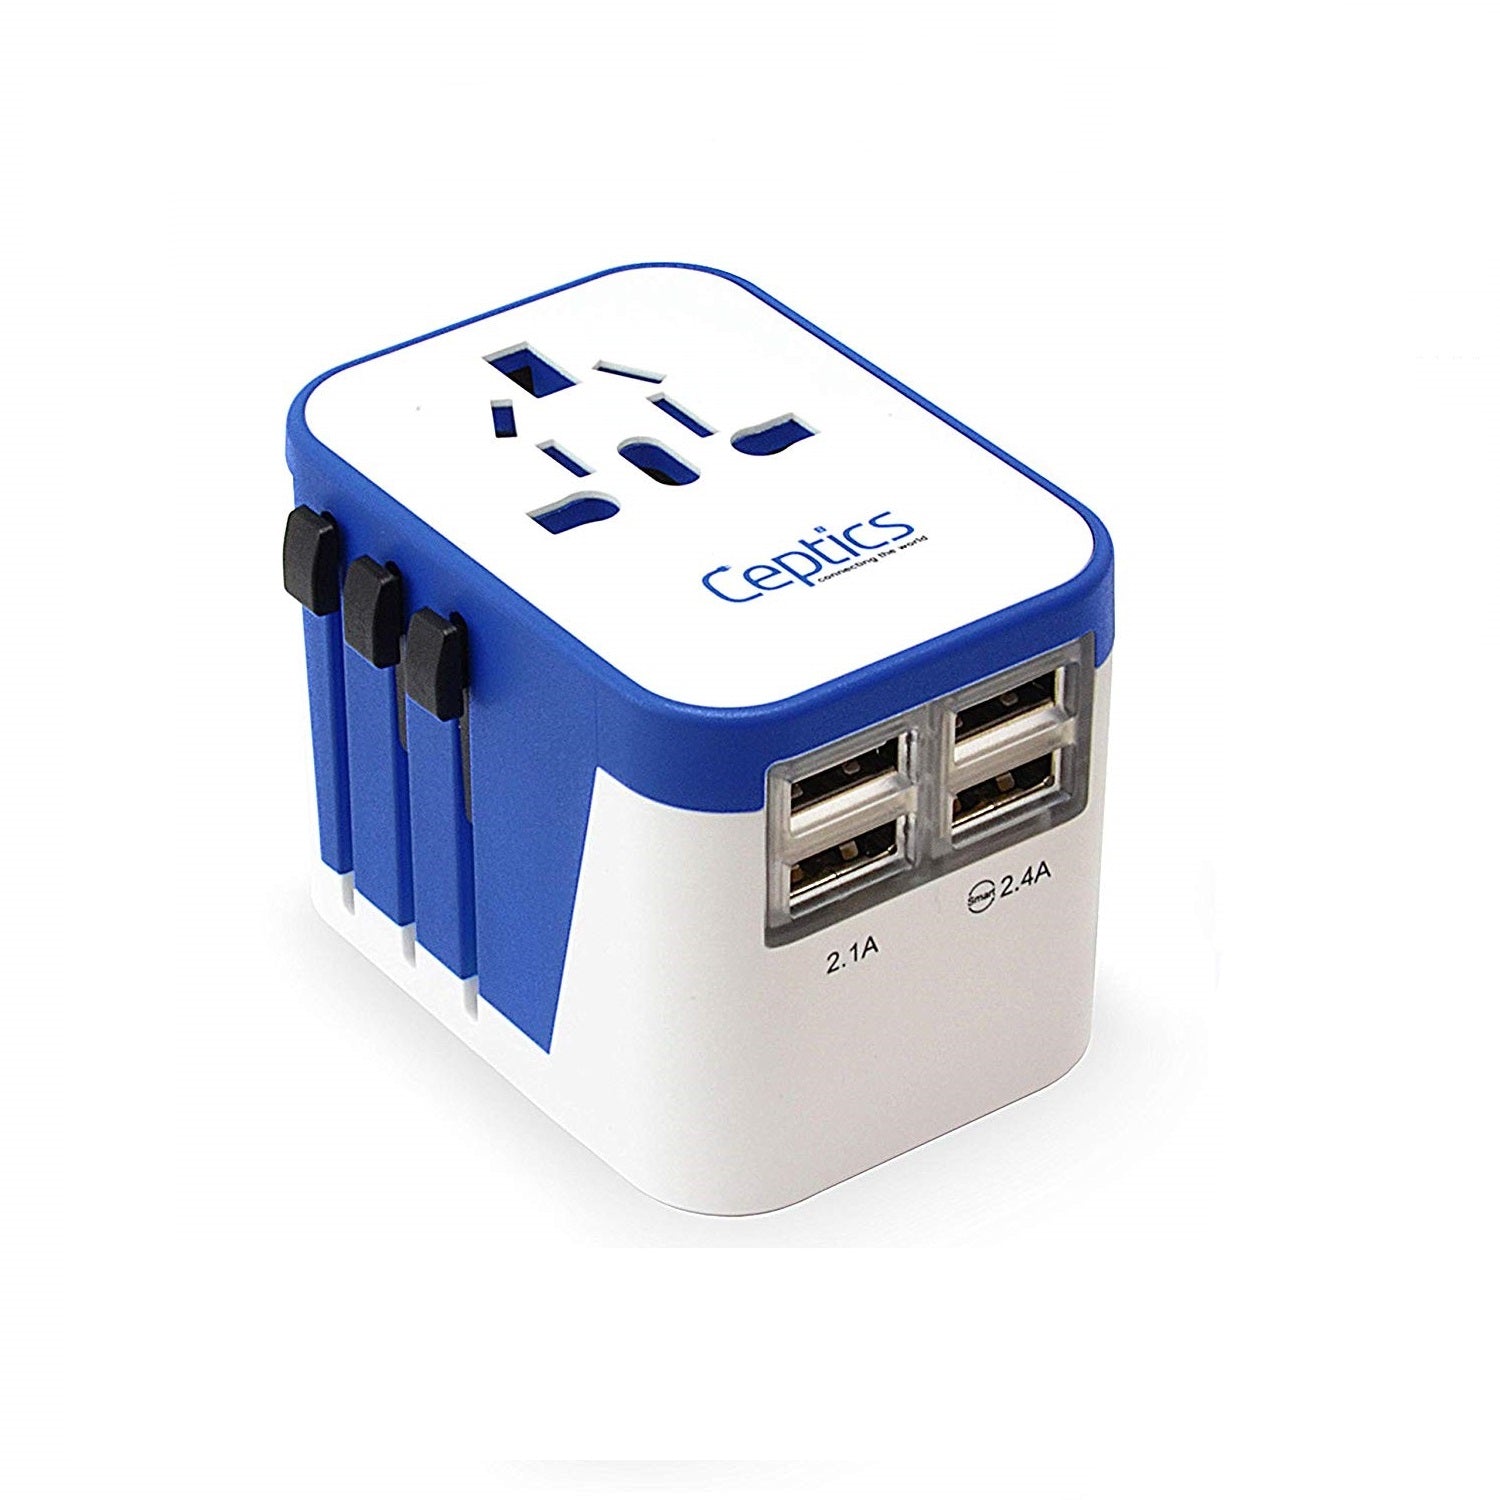 All-In-One International Travel Plug Adapter - 2 USB Ports (UP-8KU) –  Ceptics